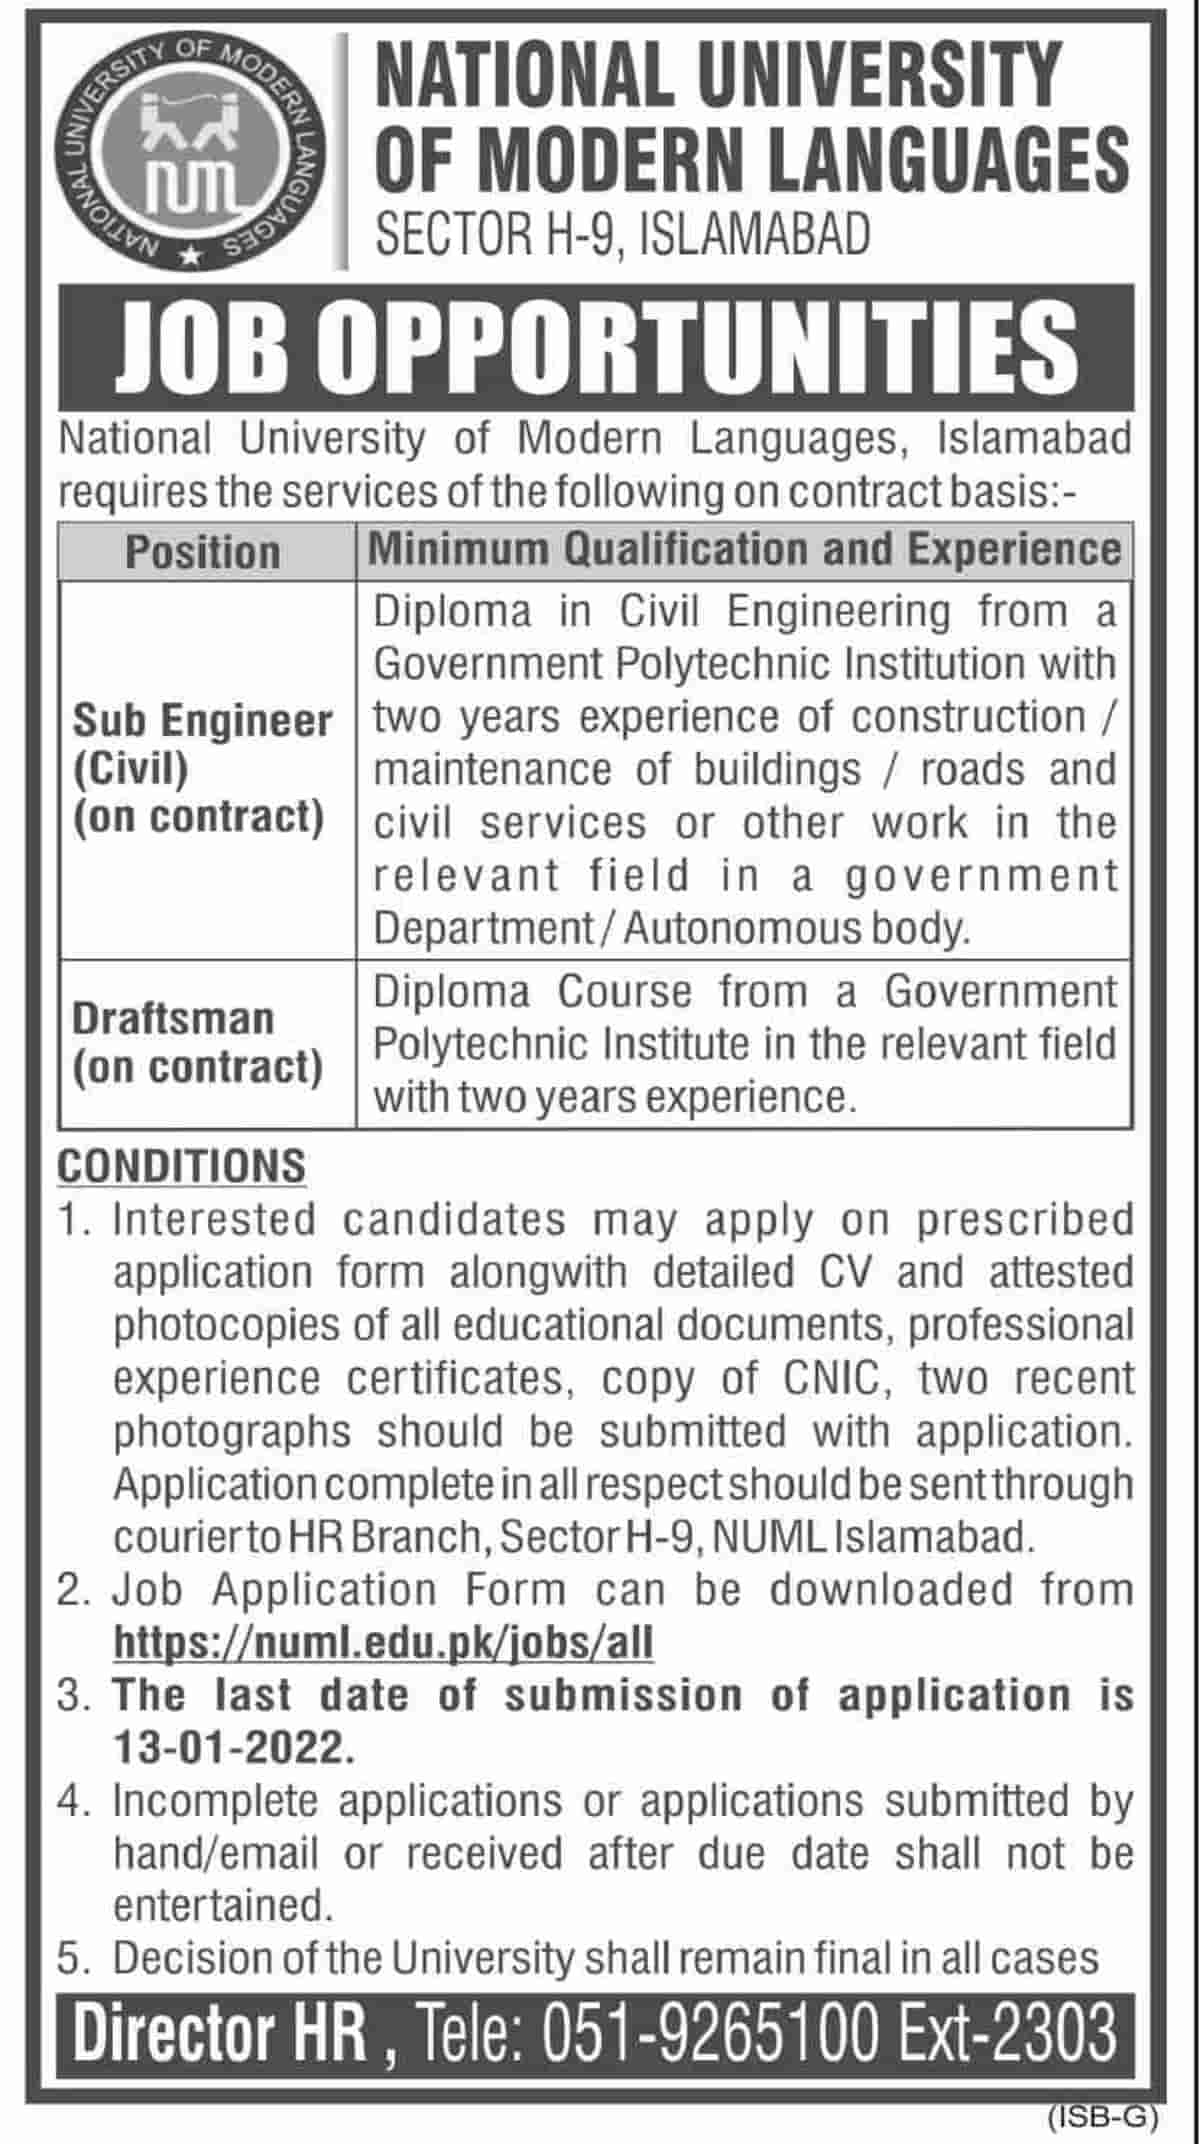 NUML University Islamabad Jobs 2022 for Sub Engineer and Draftsman